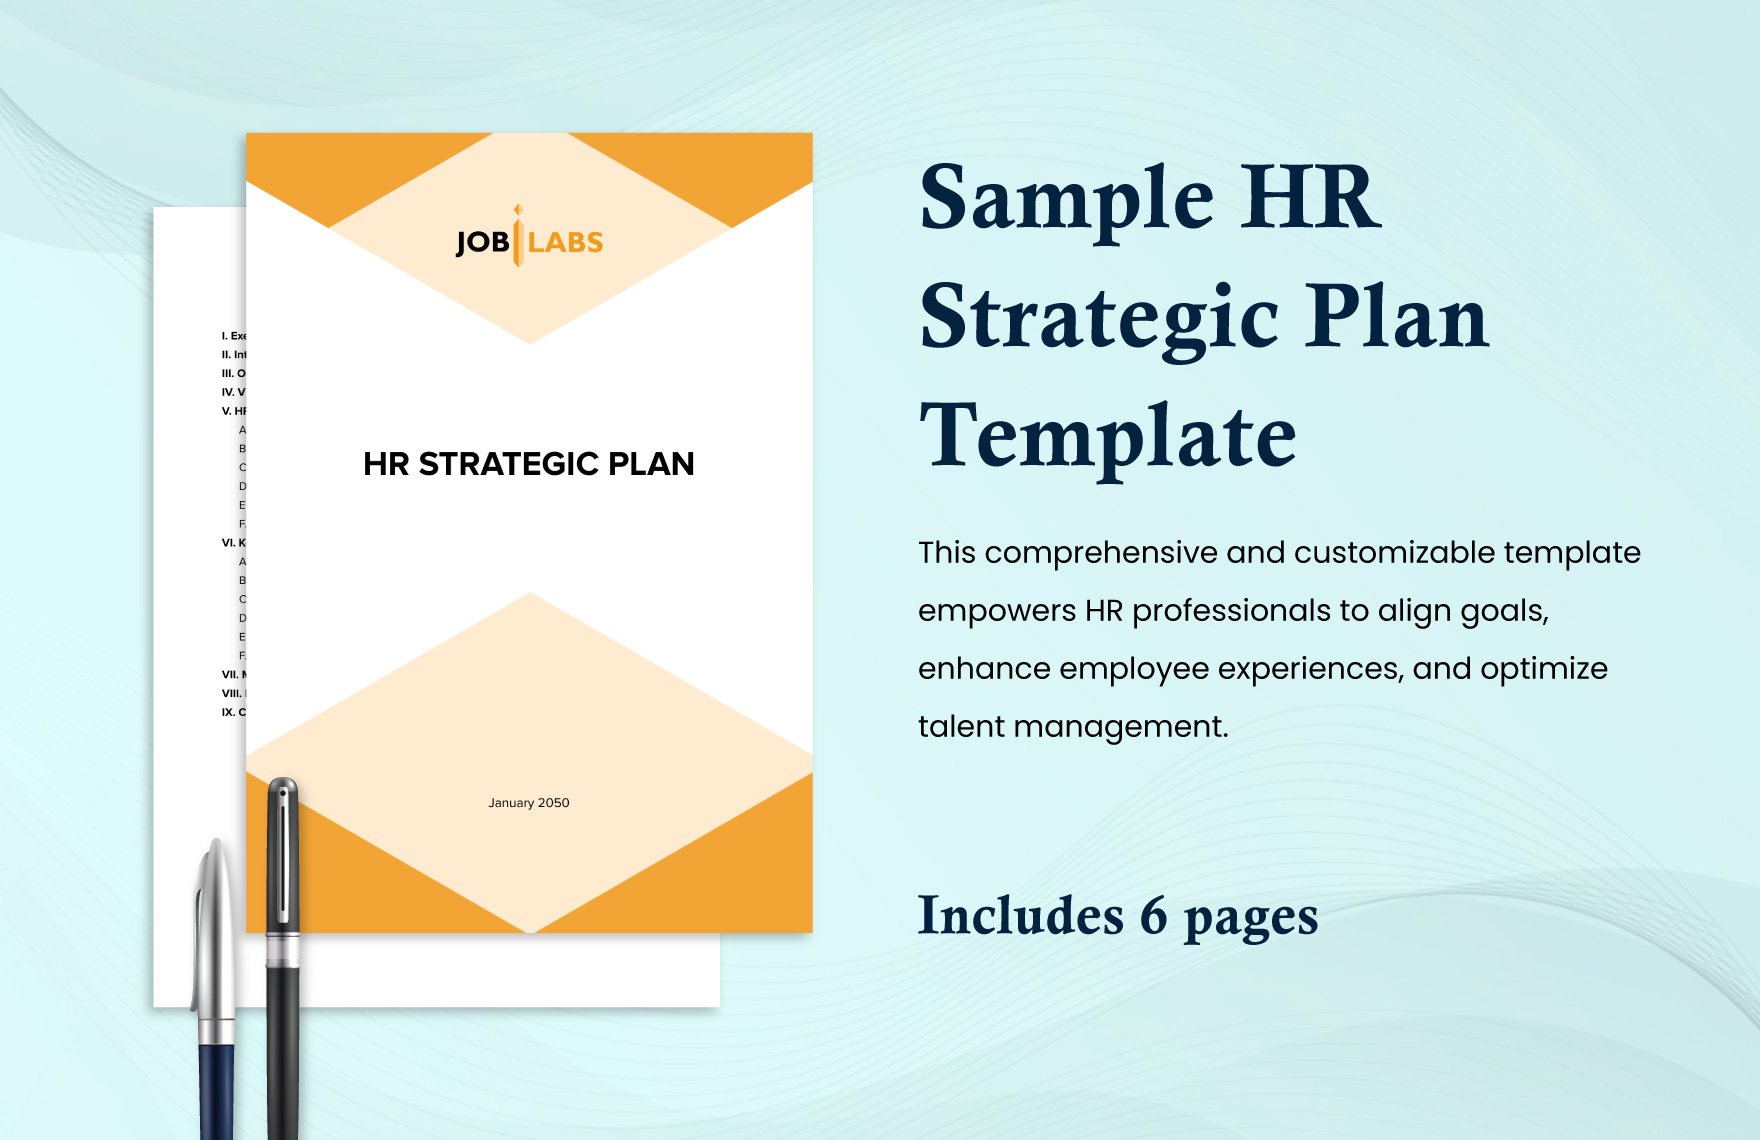 Sample HR Strategic Plan Template